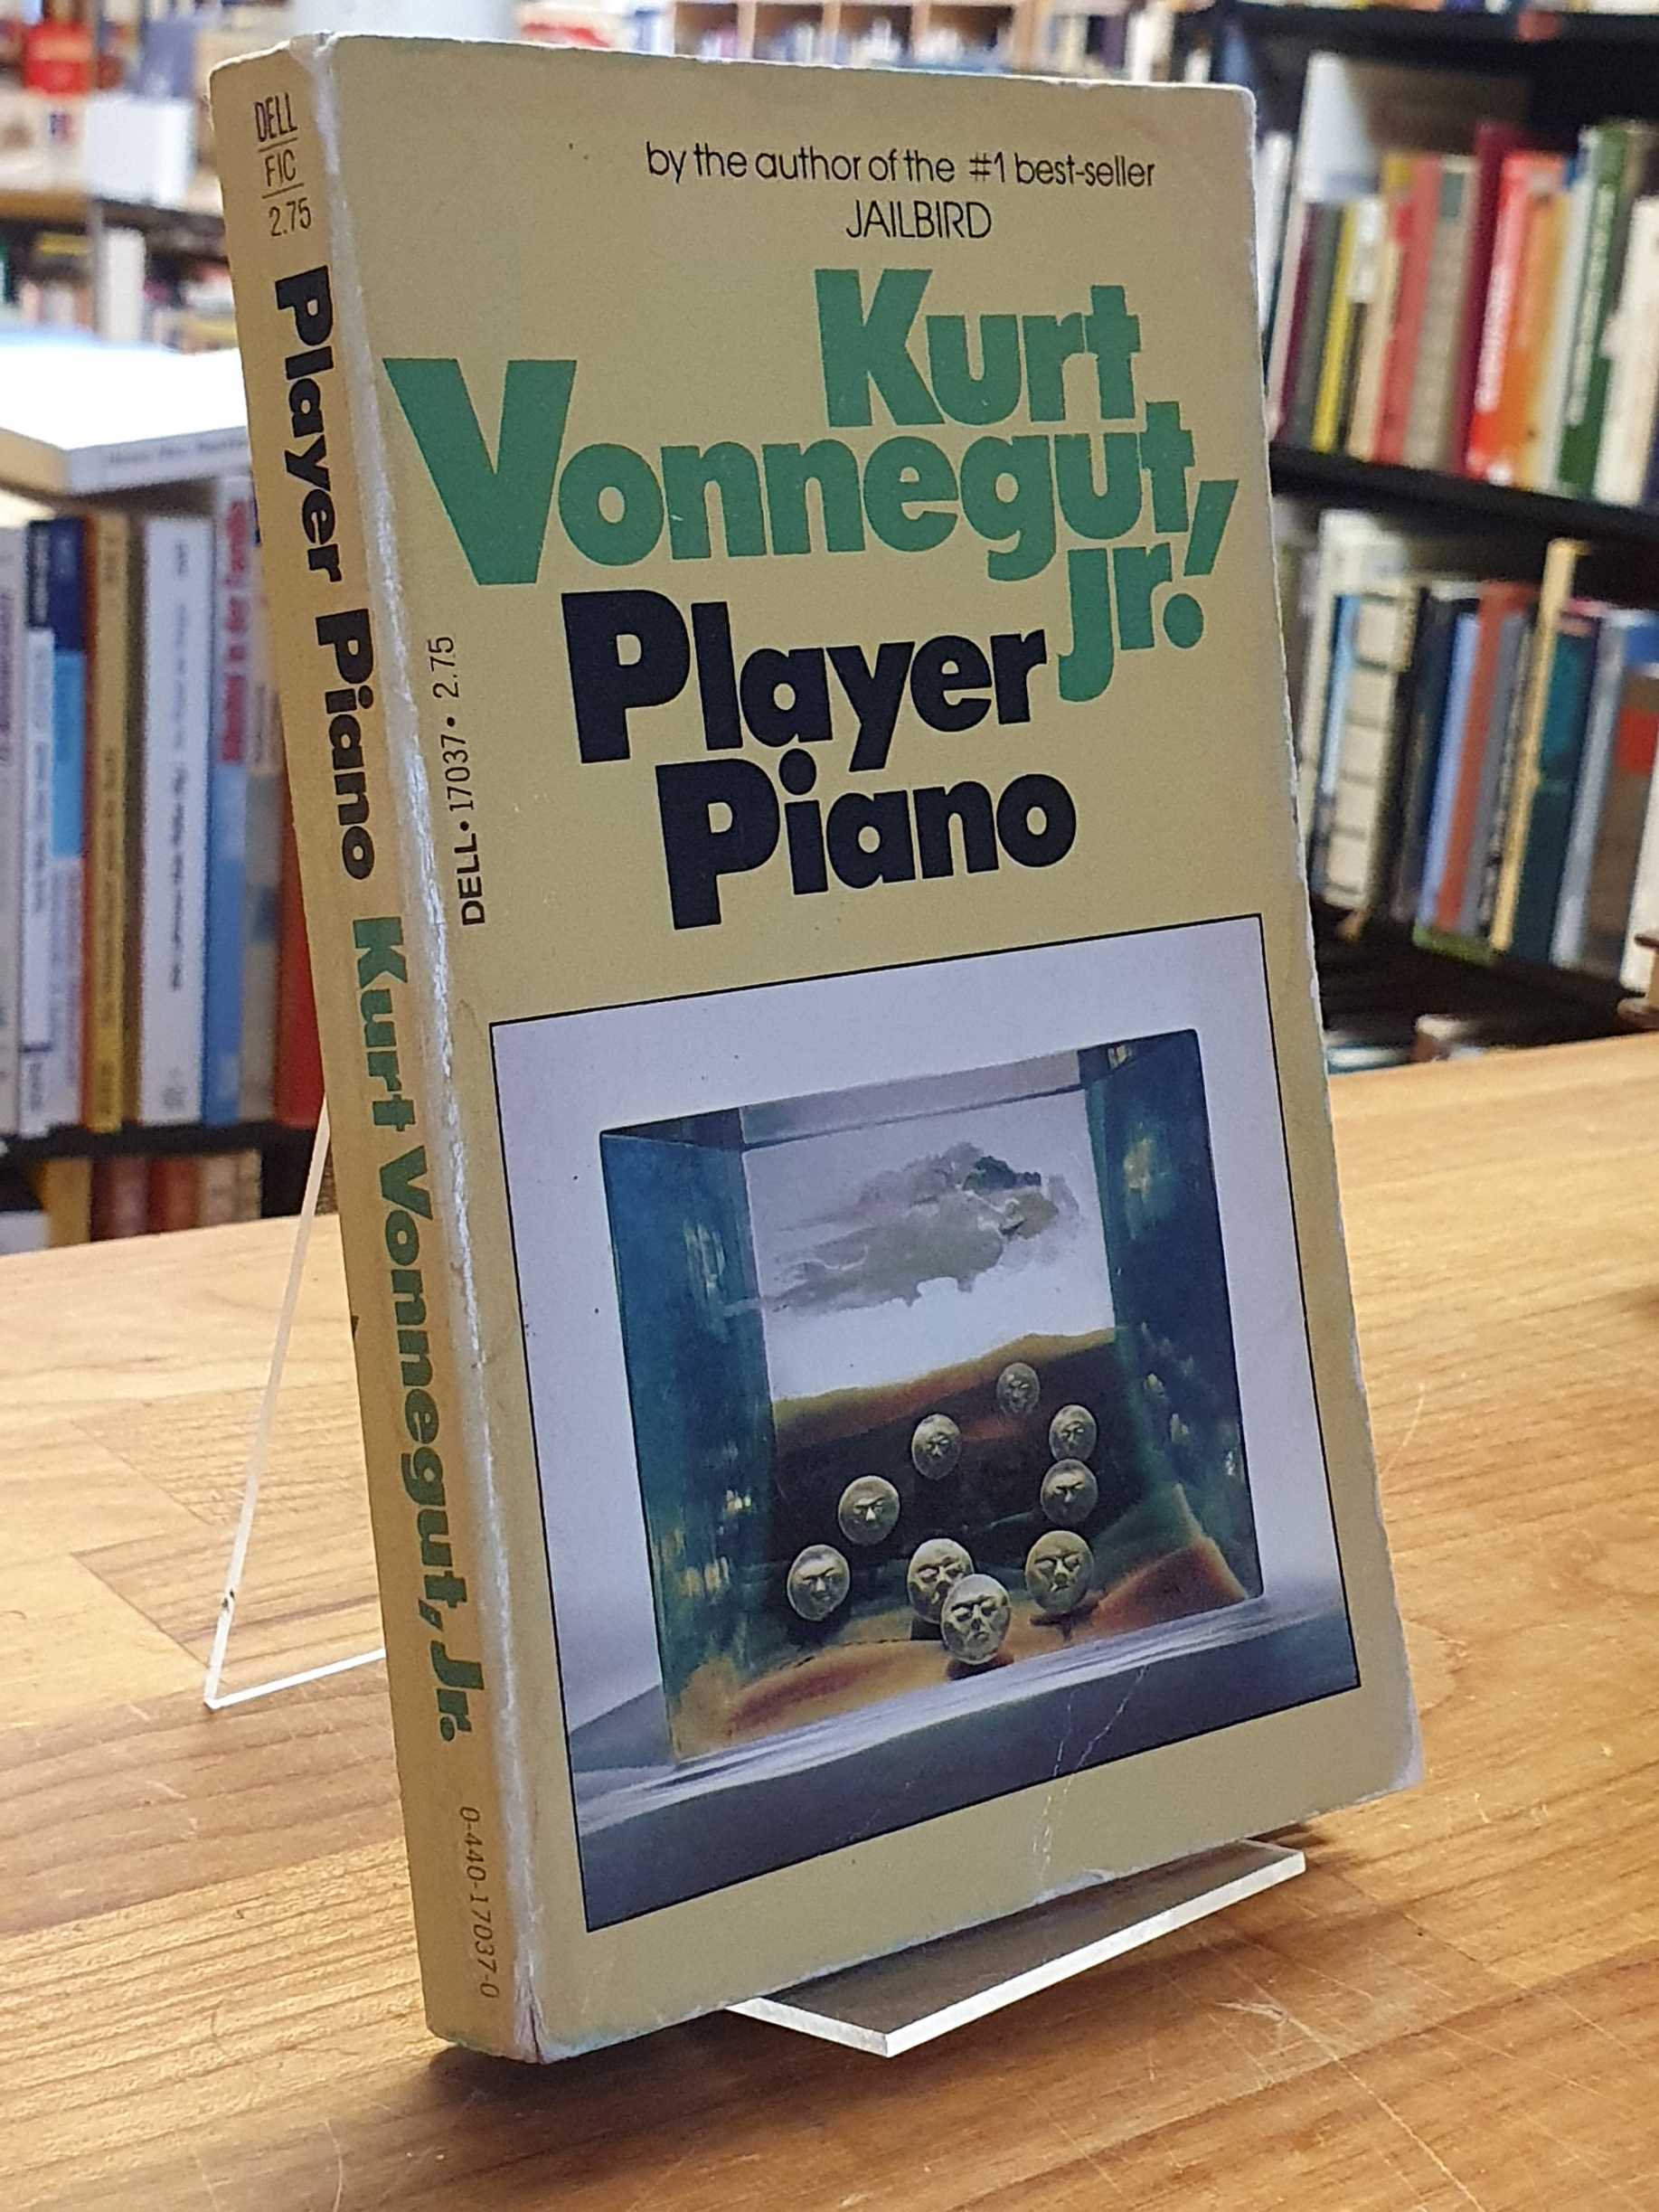 Vonnegut, Player Piano,